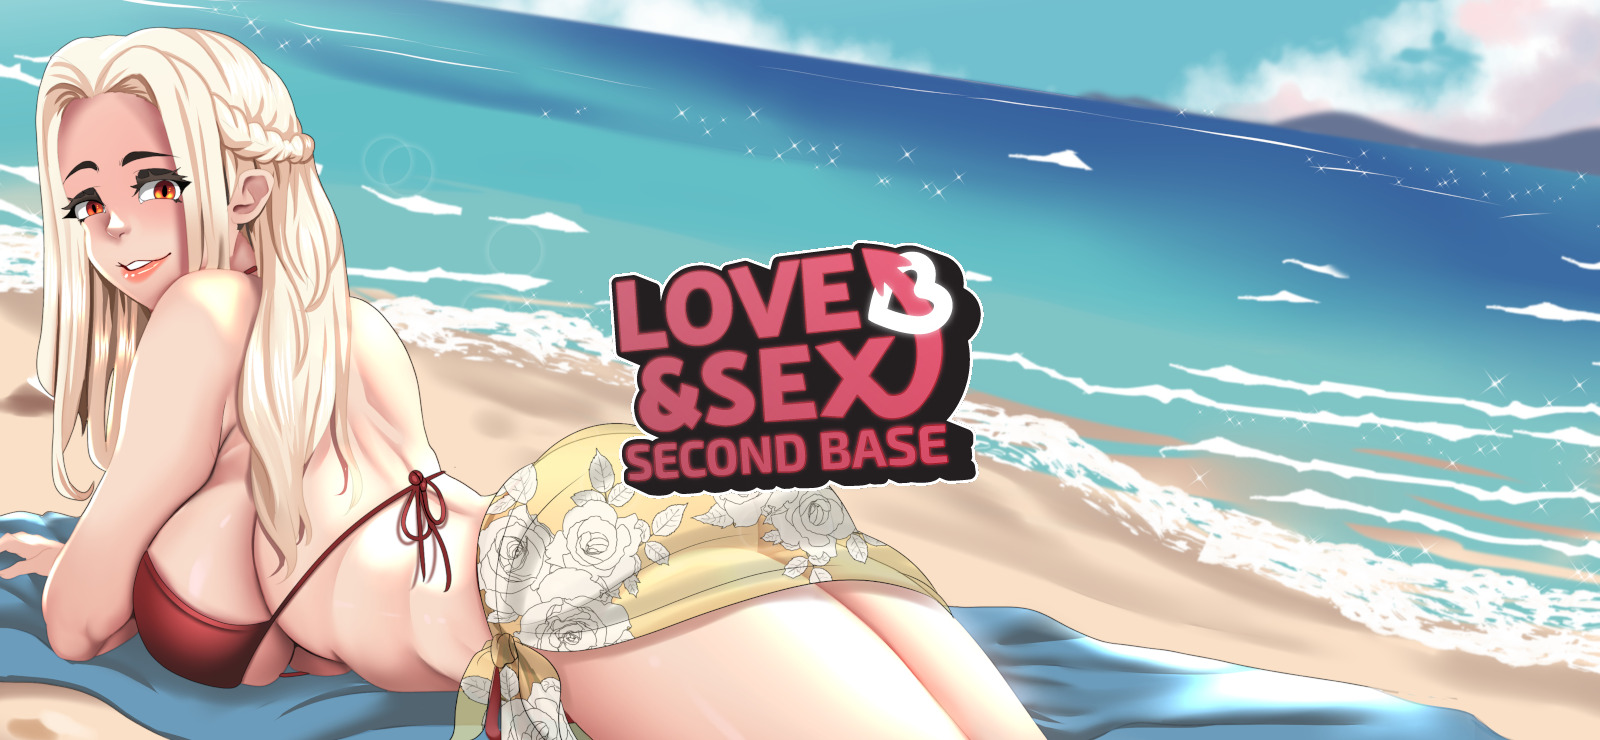 Love & sex second base